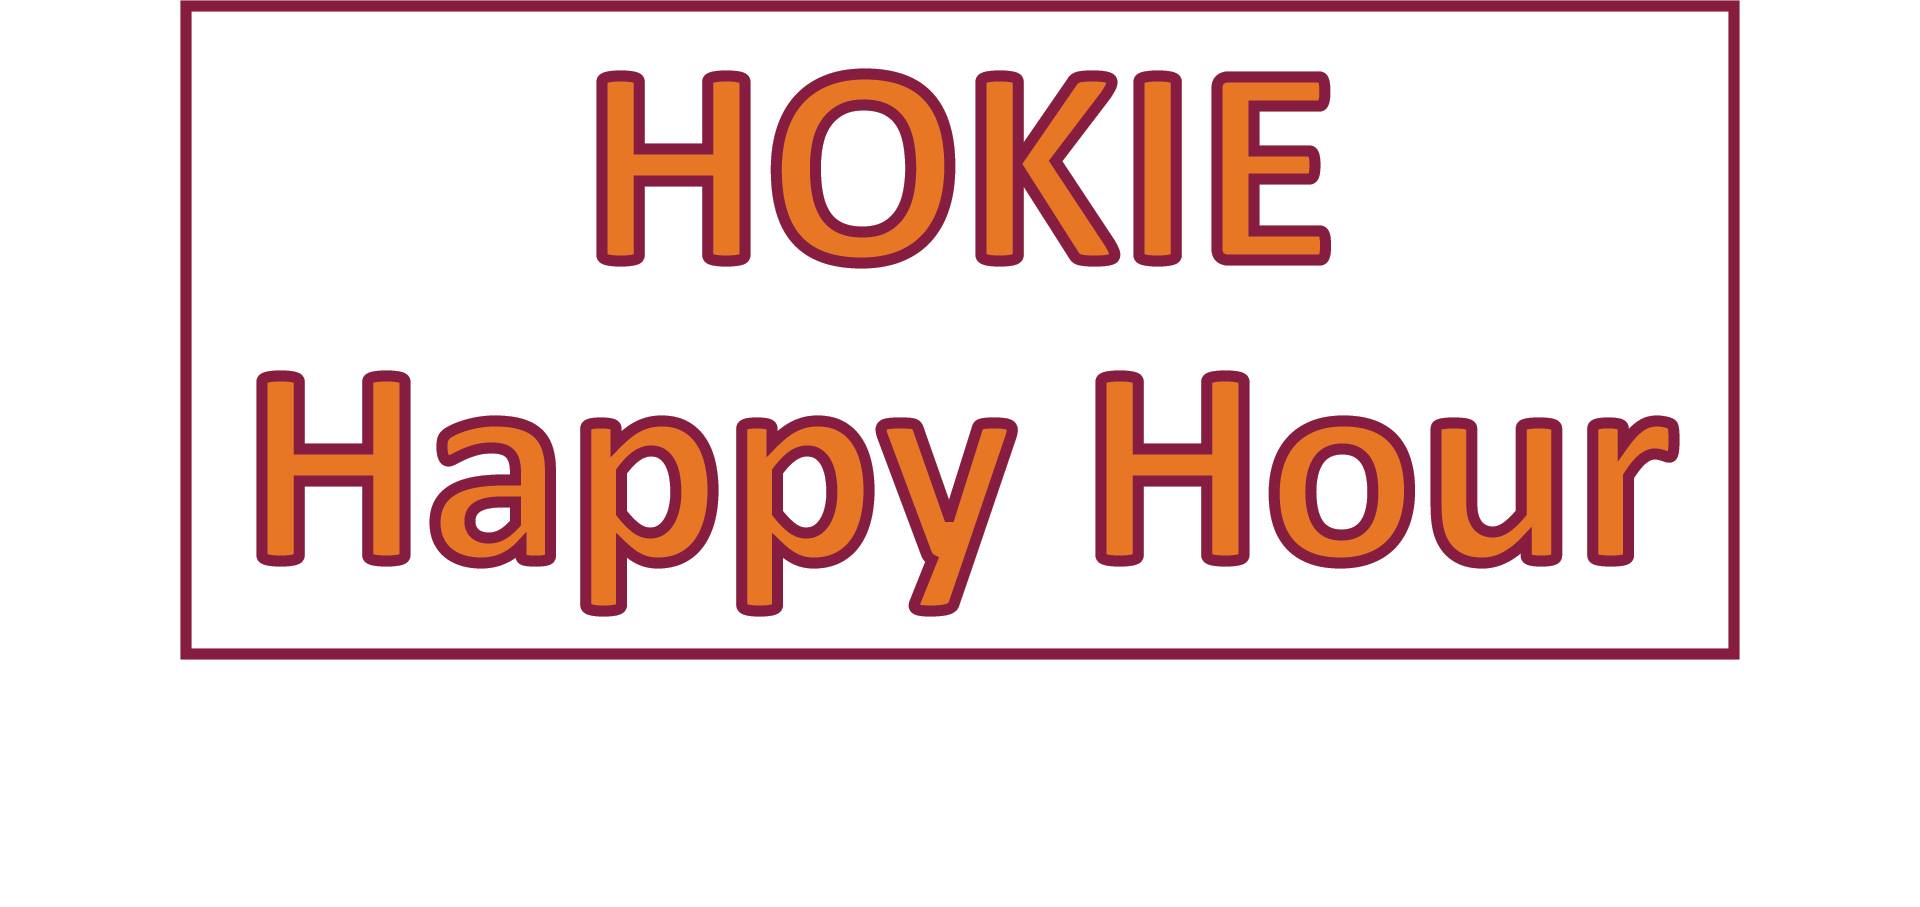 May 2022 Hokie Happy Hour